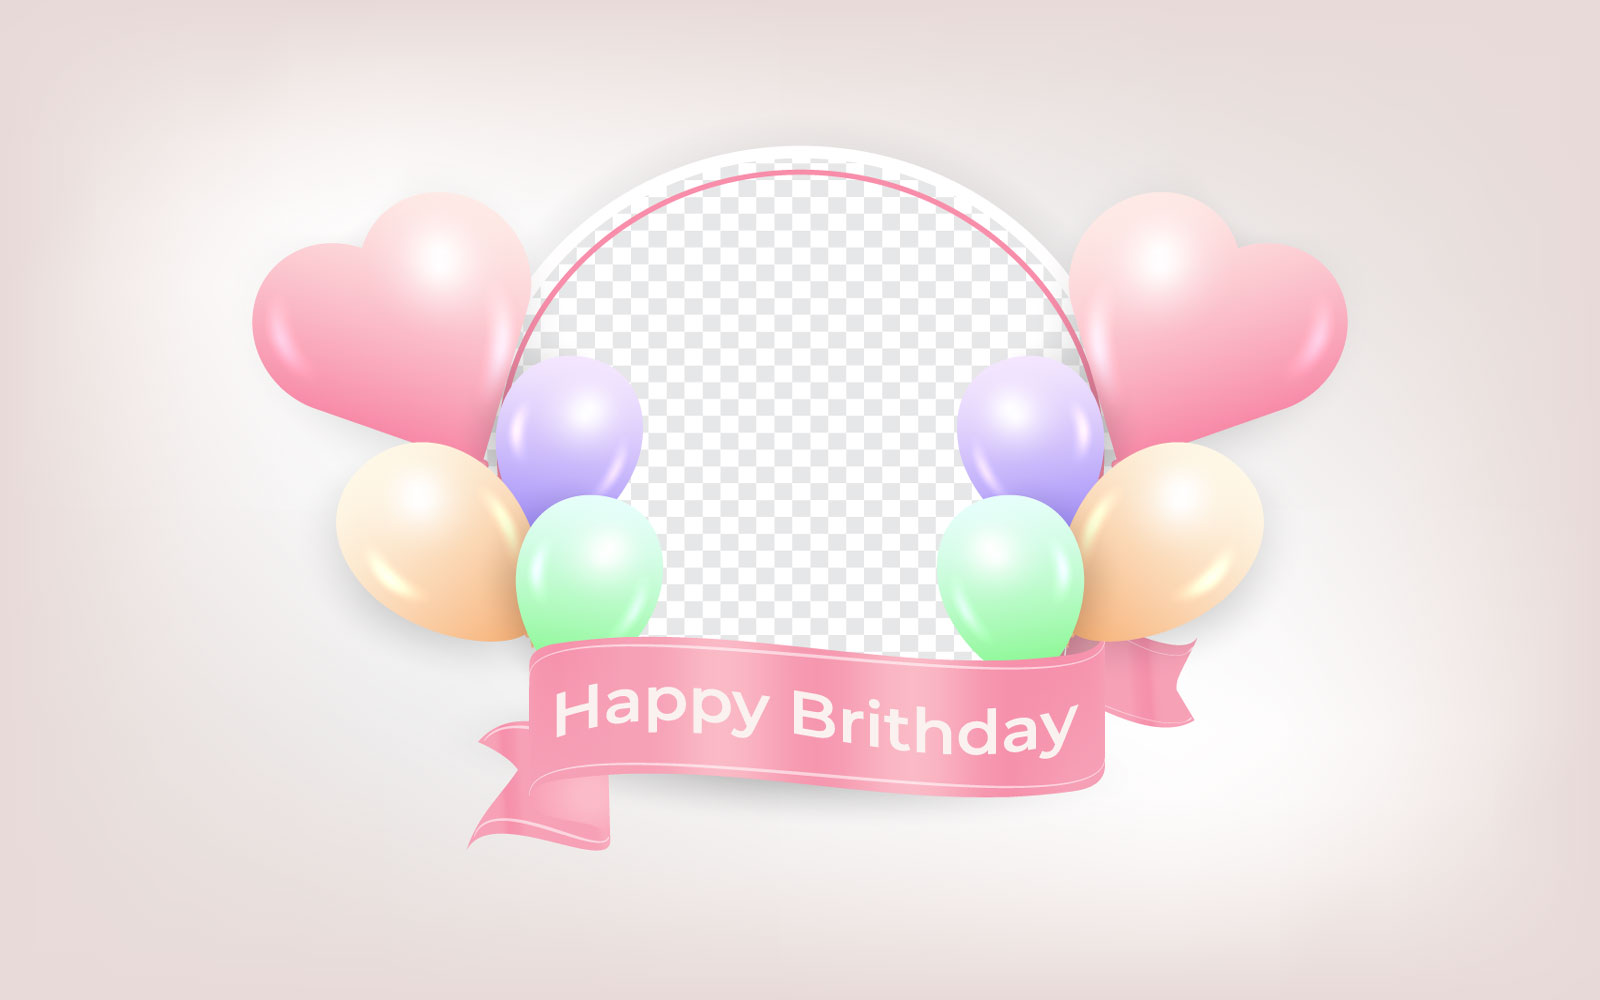 Birthday Photo Frame with Balloon Vector